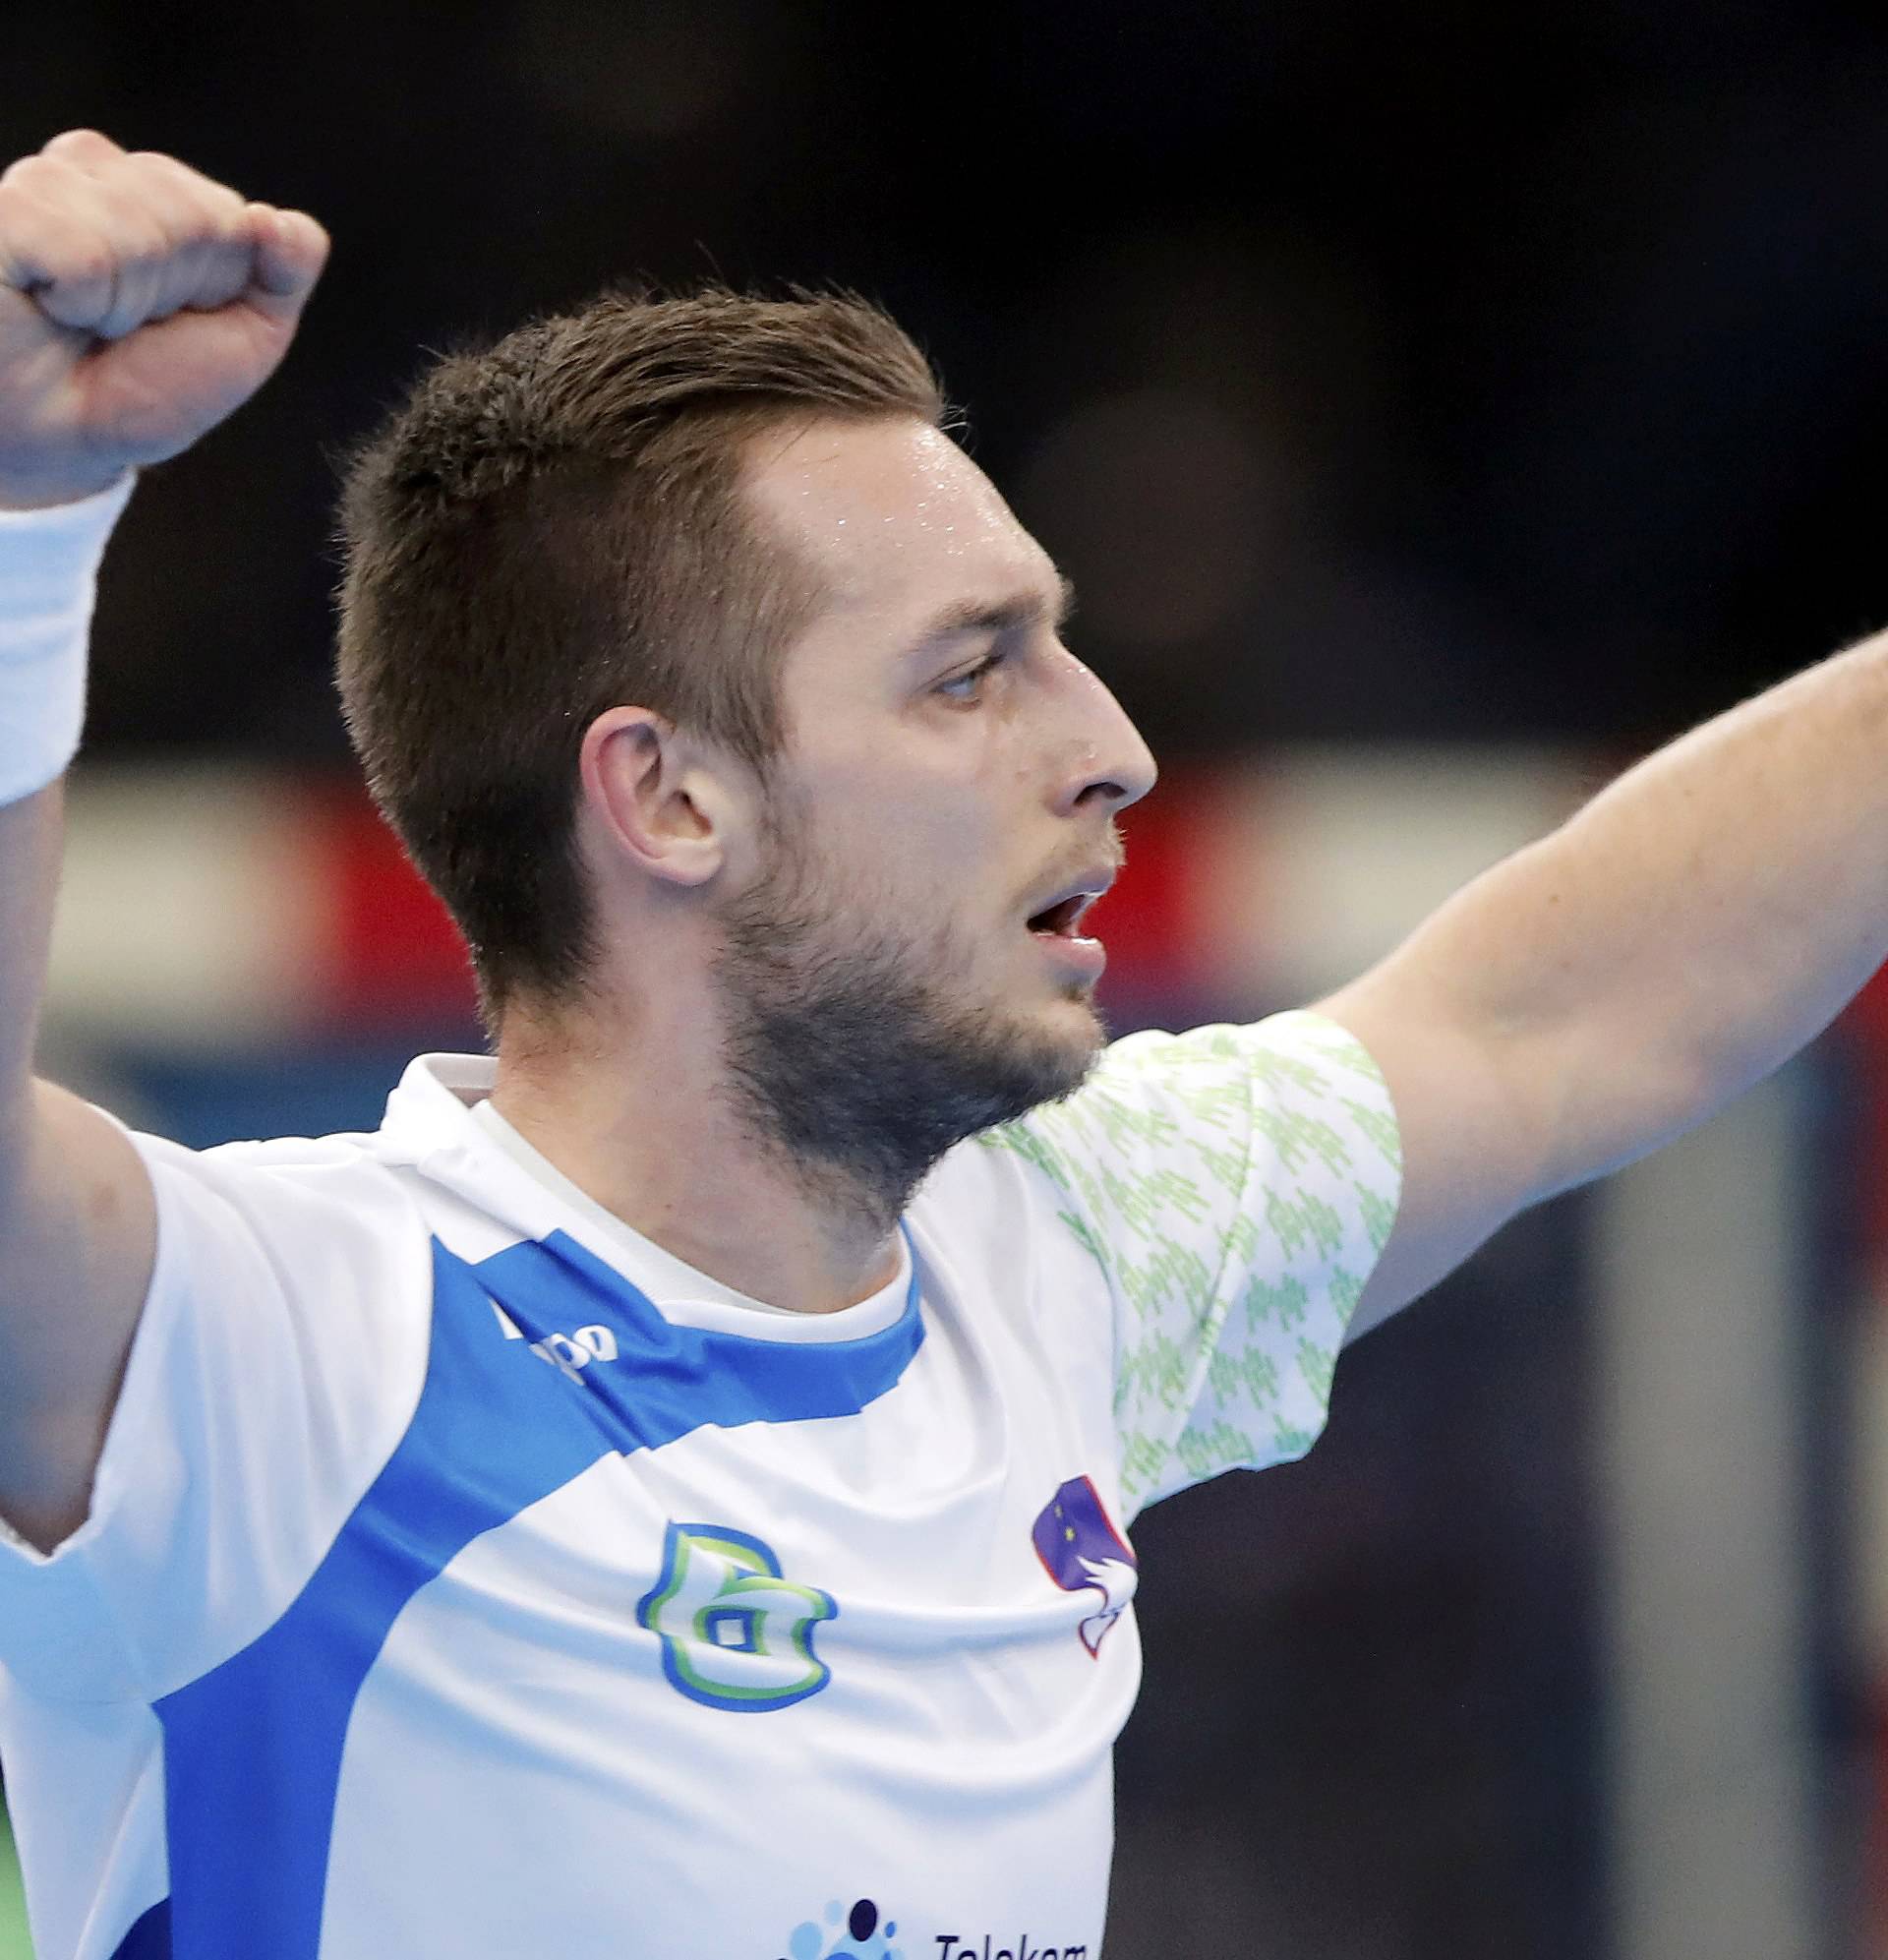 Men's Handball - France v Slovenia - 2017 Men's World Championship Semi-Finals 